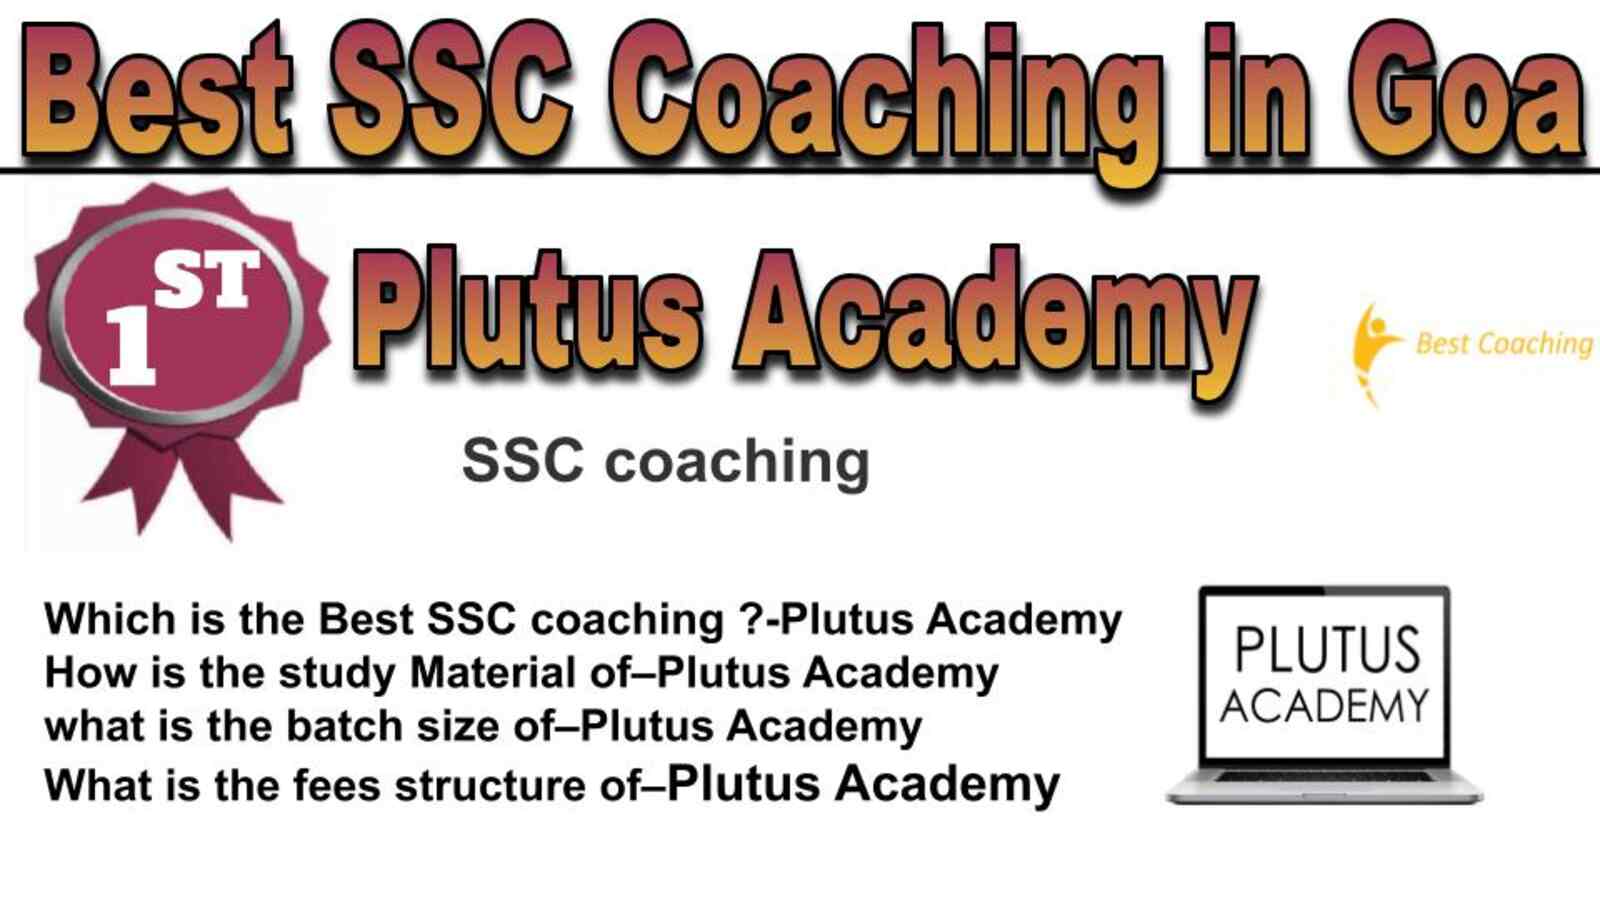 Rank 1 best SSC coaching in Goa